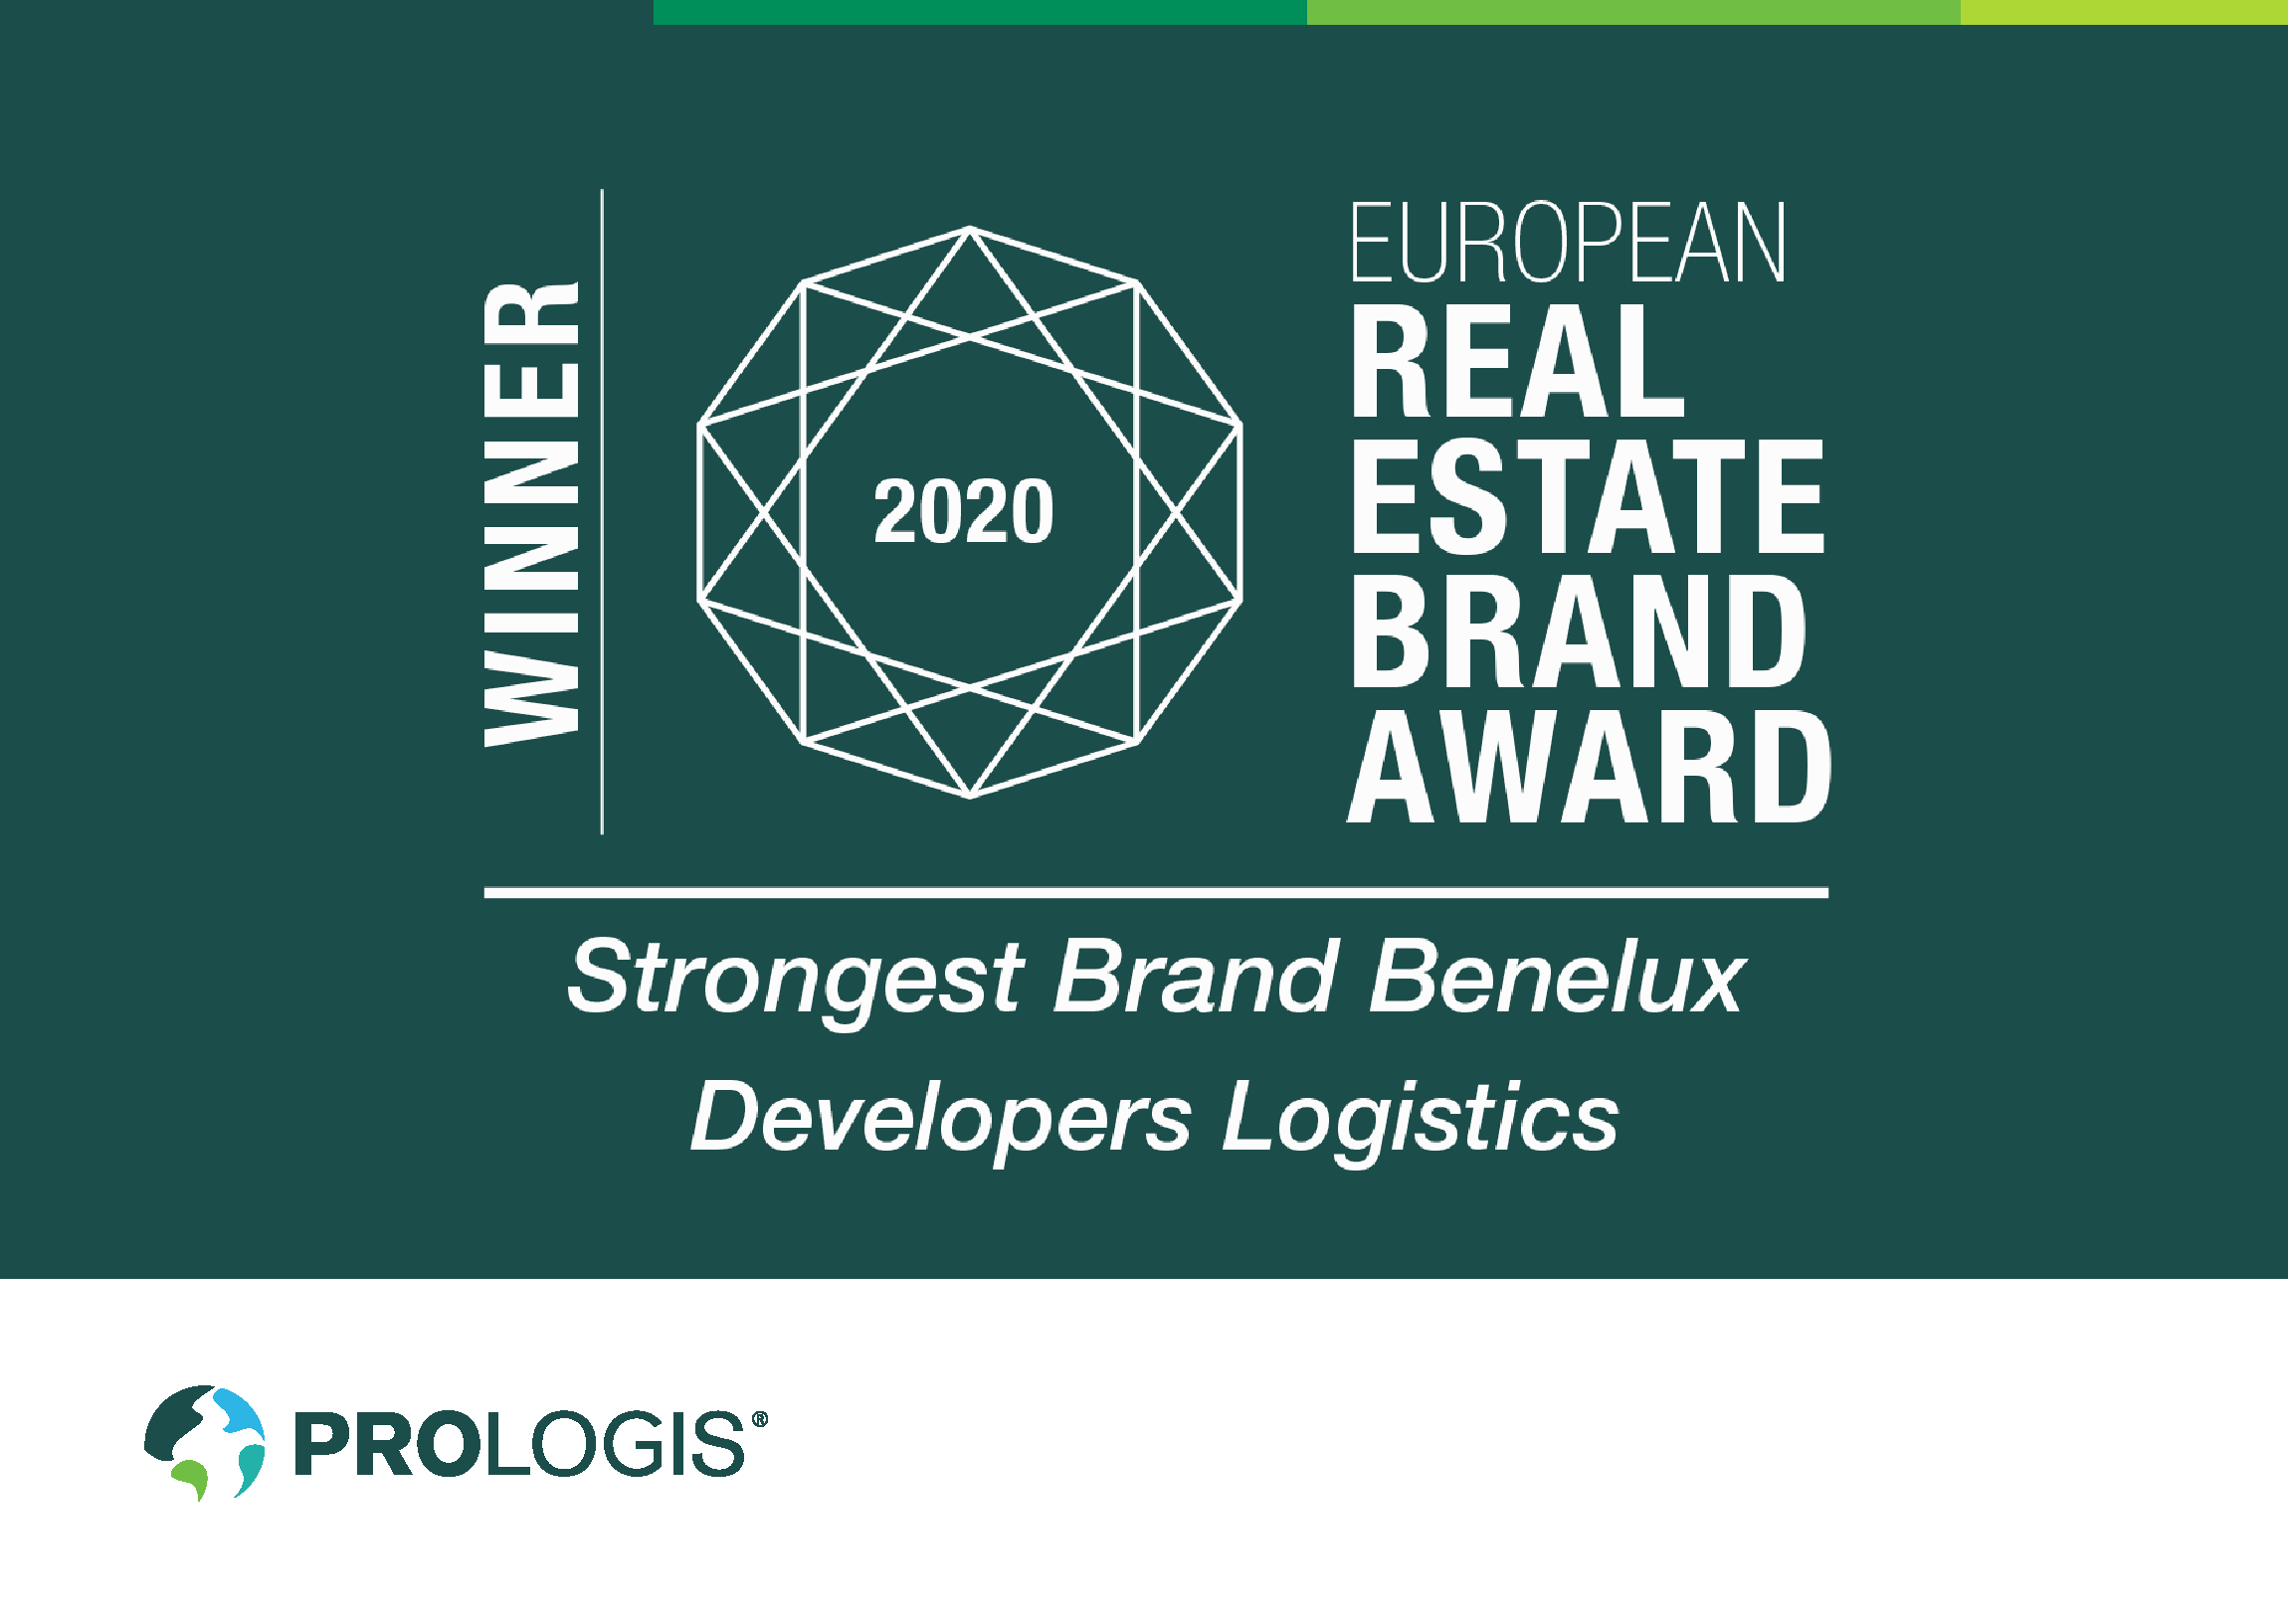 Benelux real estate brand award